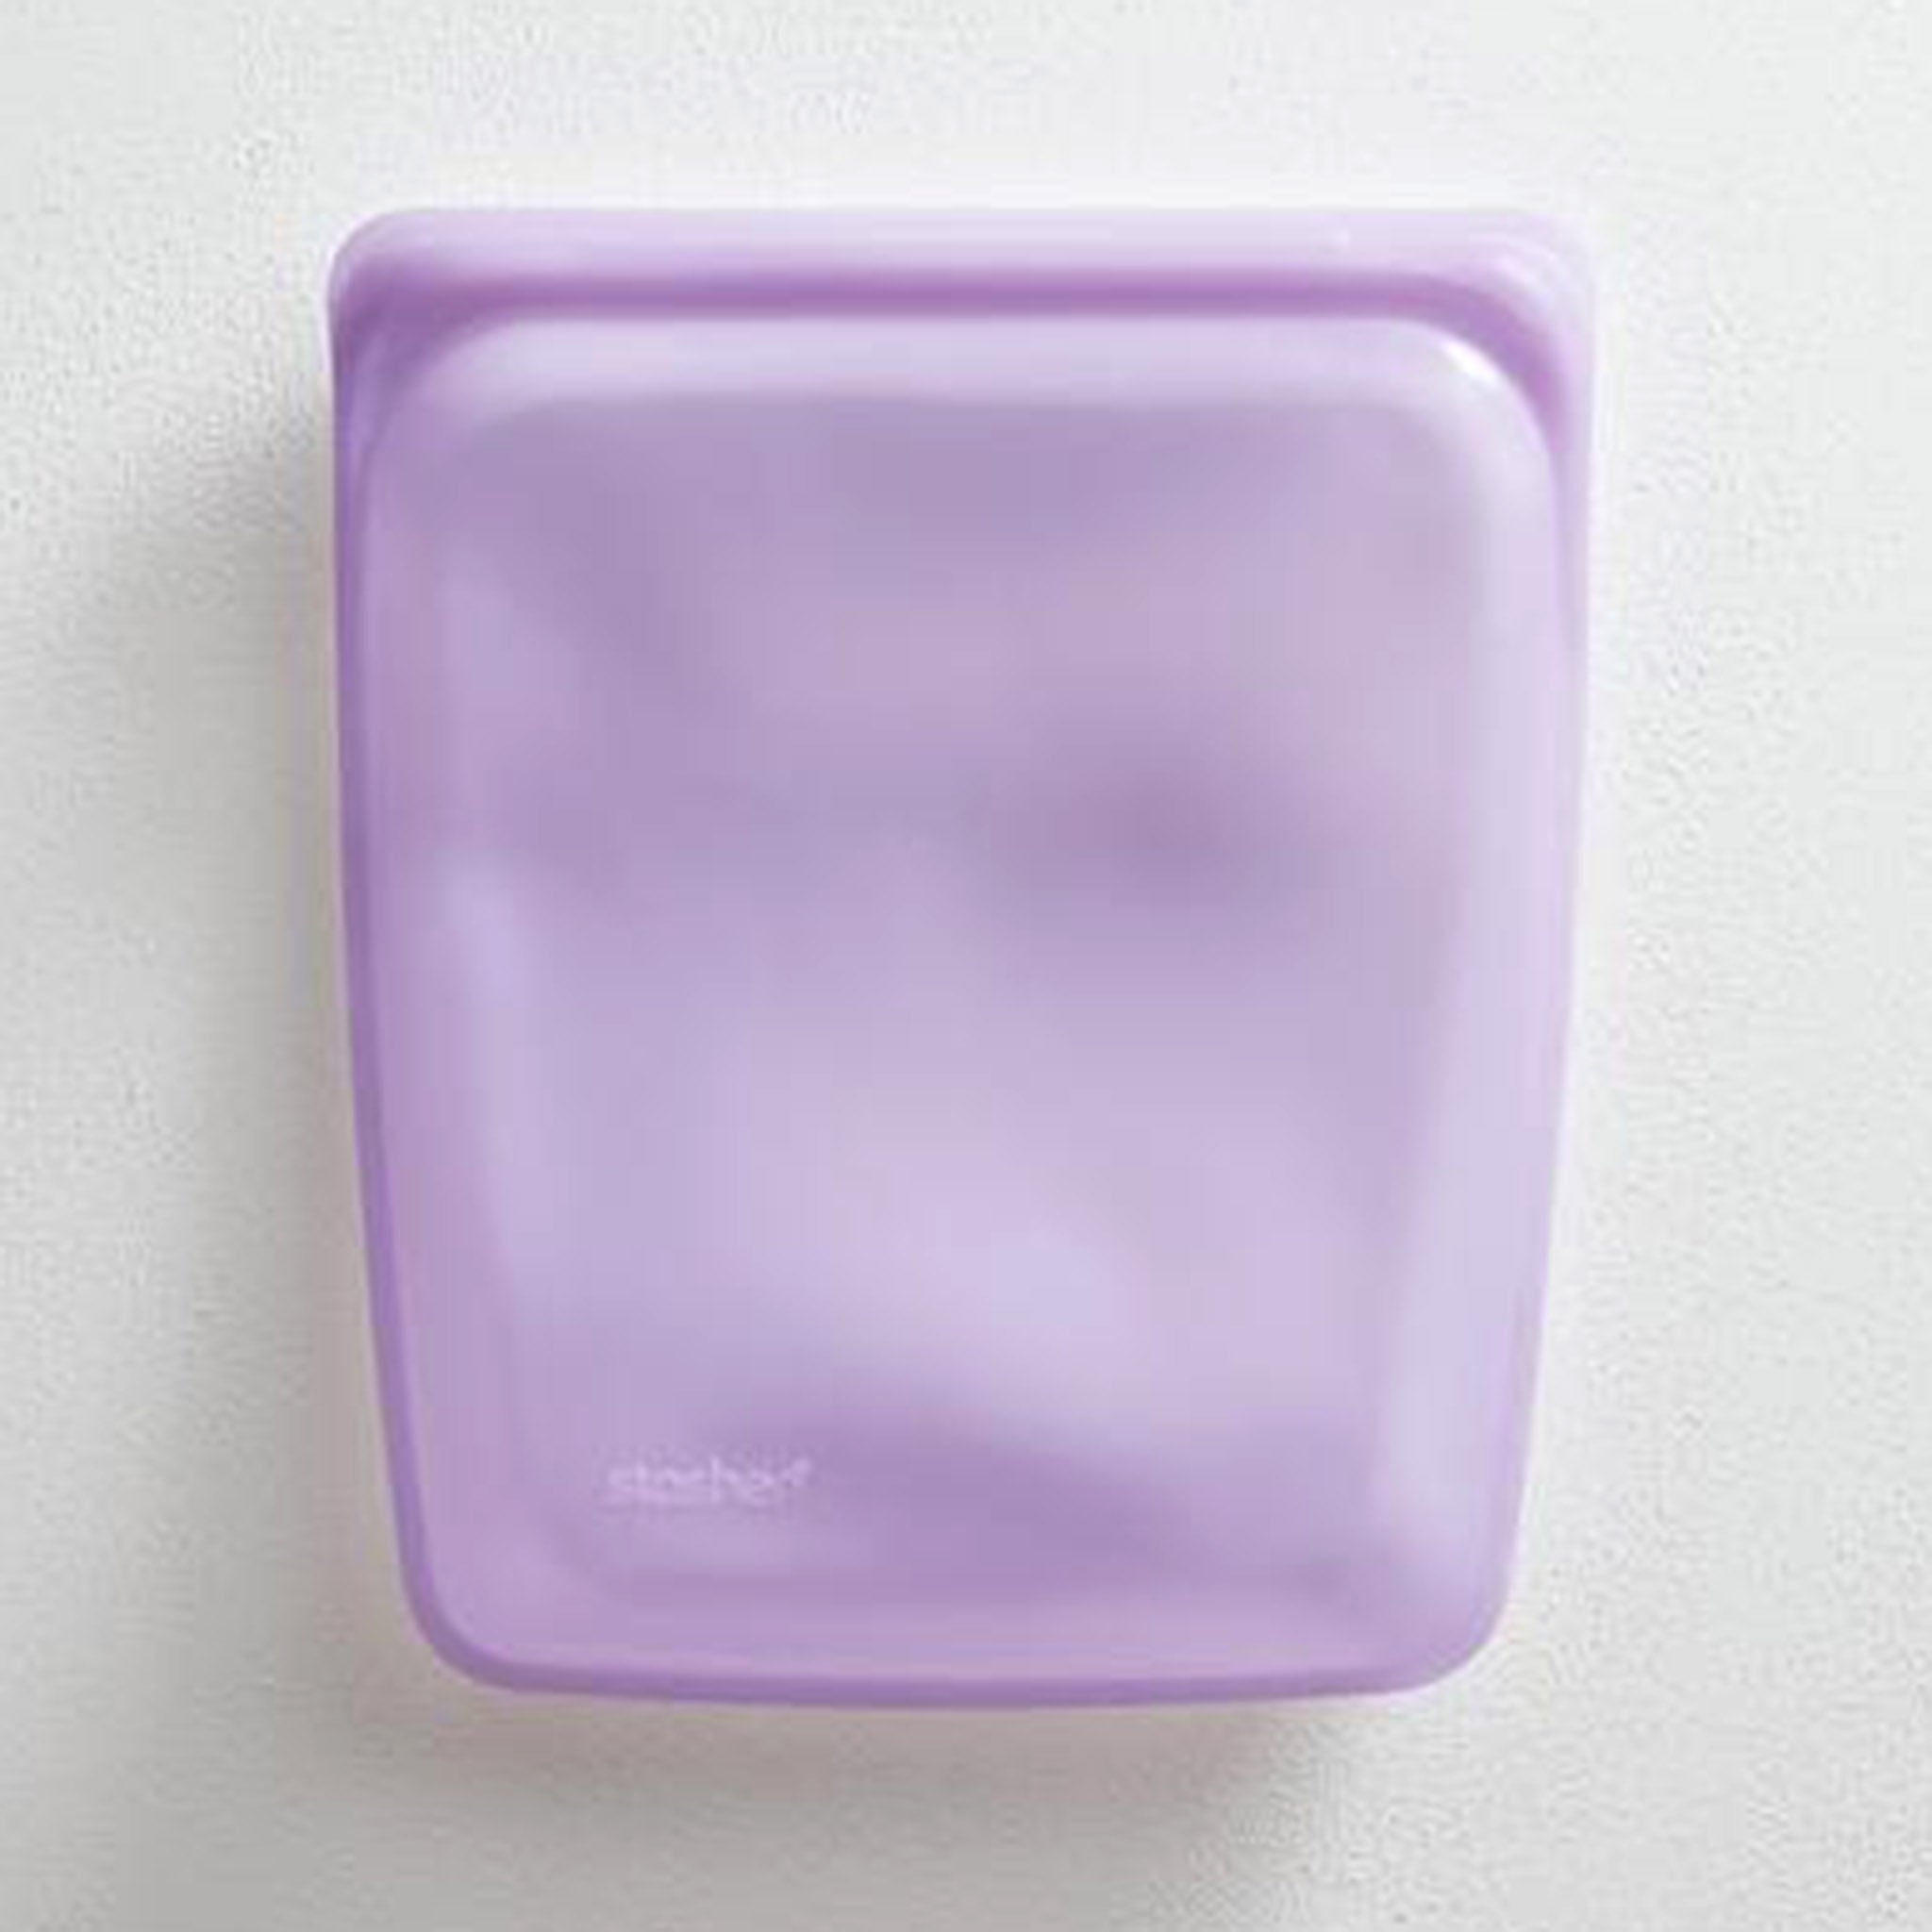 Stasher Reusable Silicone Half-Gallon Bag Purple - Kitchen & Company